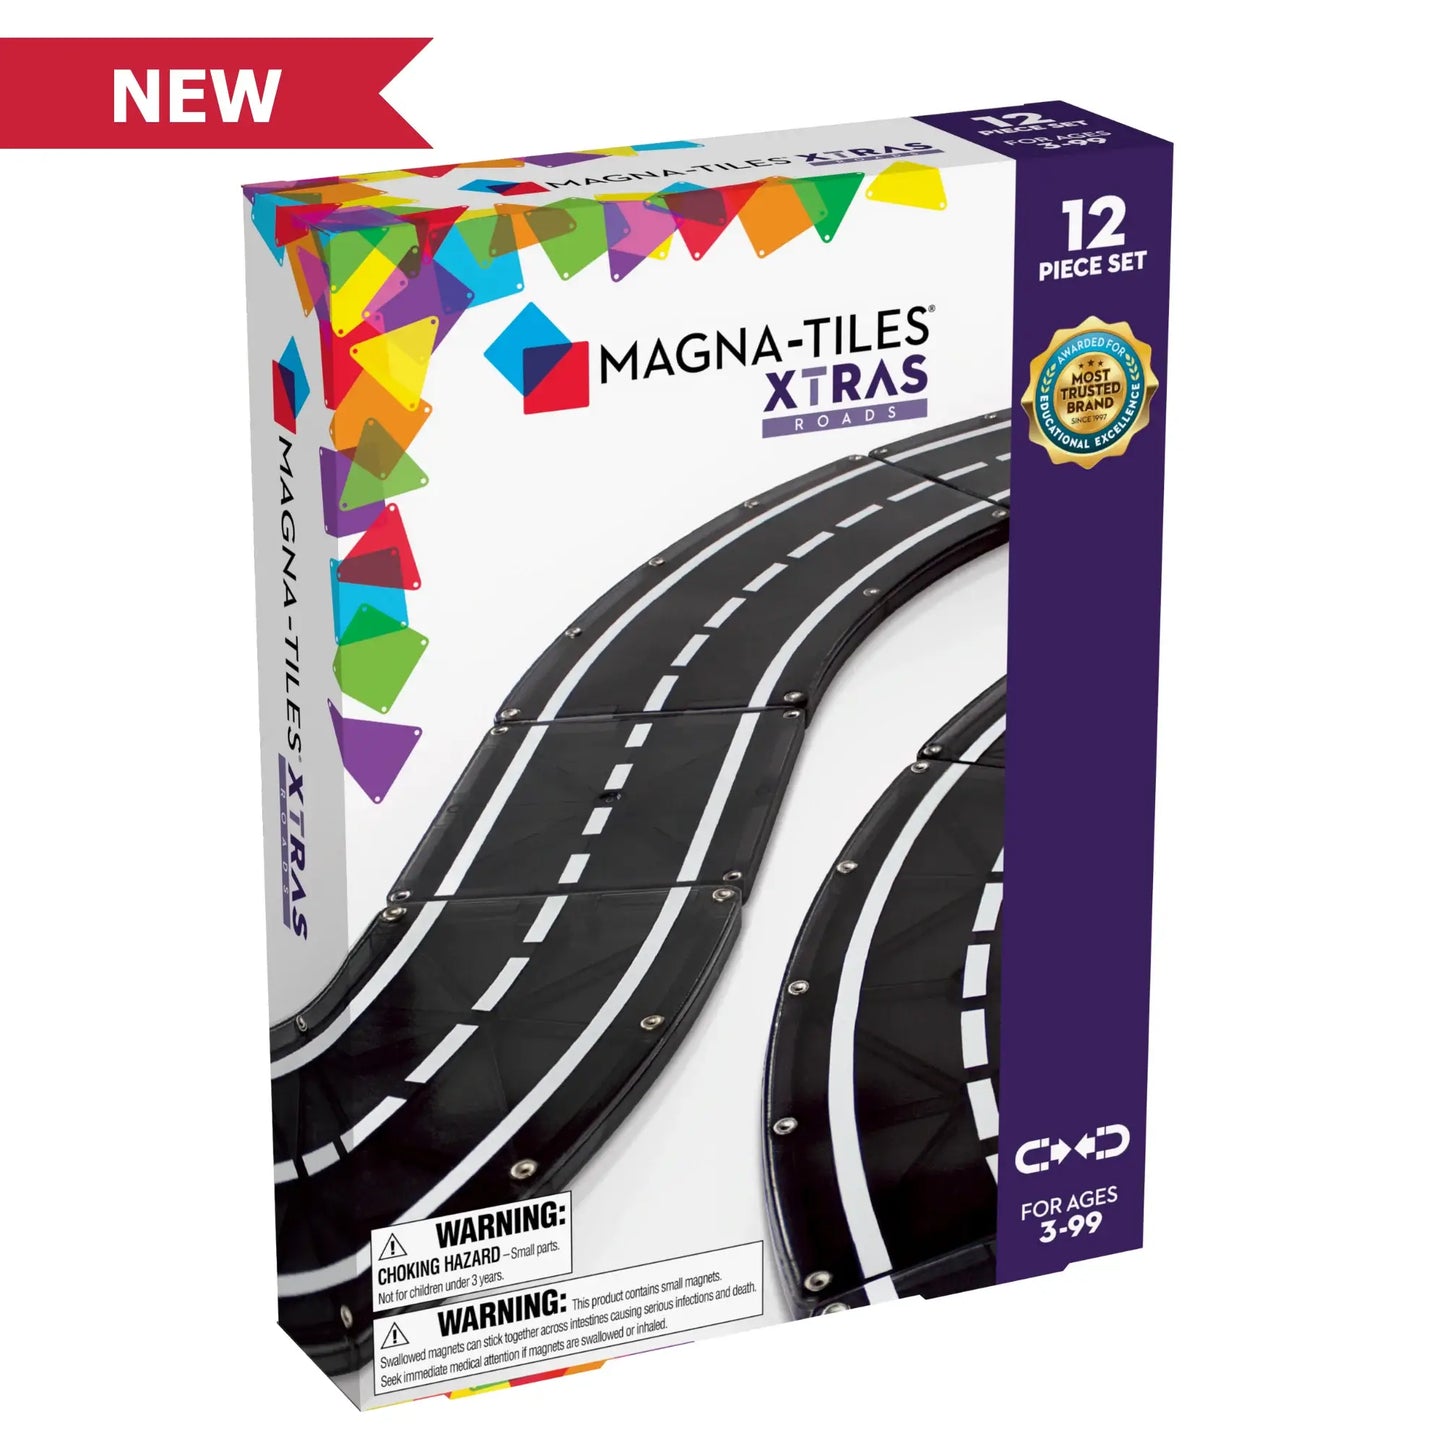 XTRAS: Roads 12-Piece Magna Tiles Set